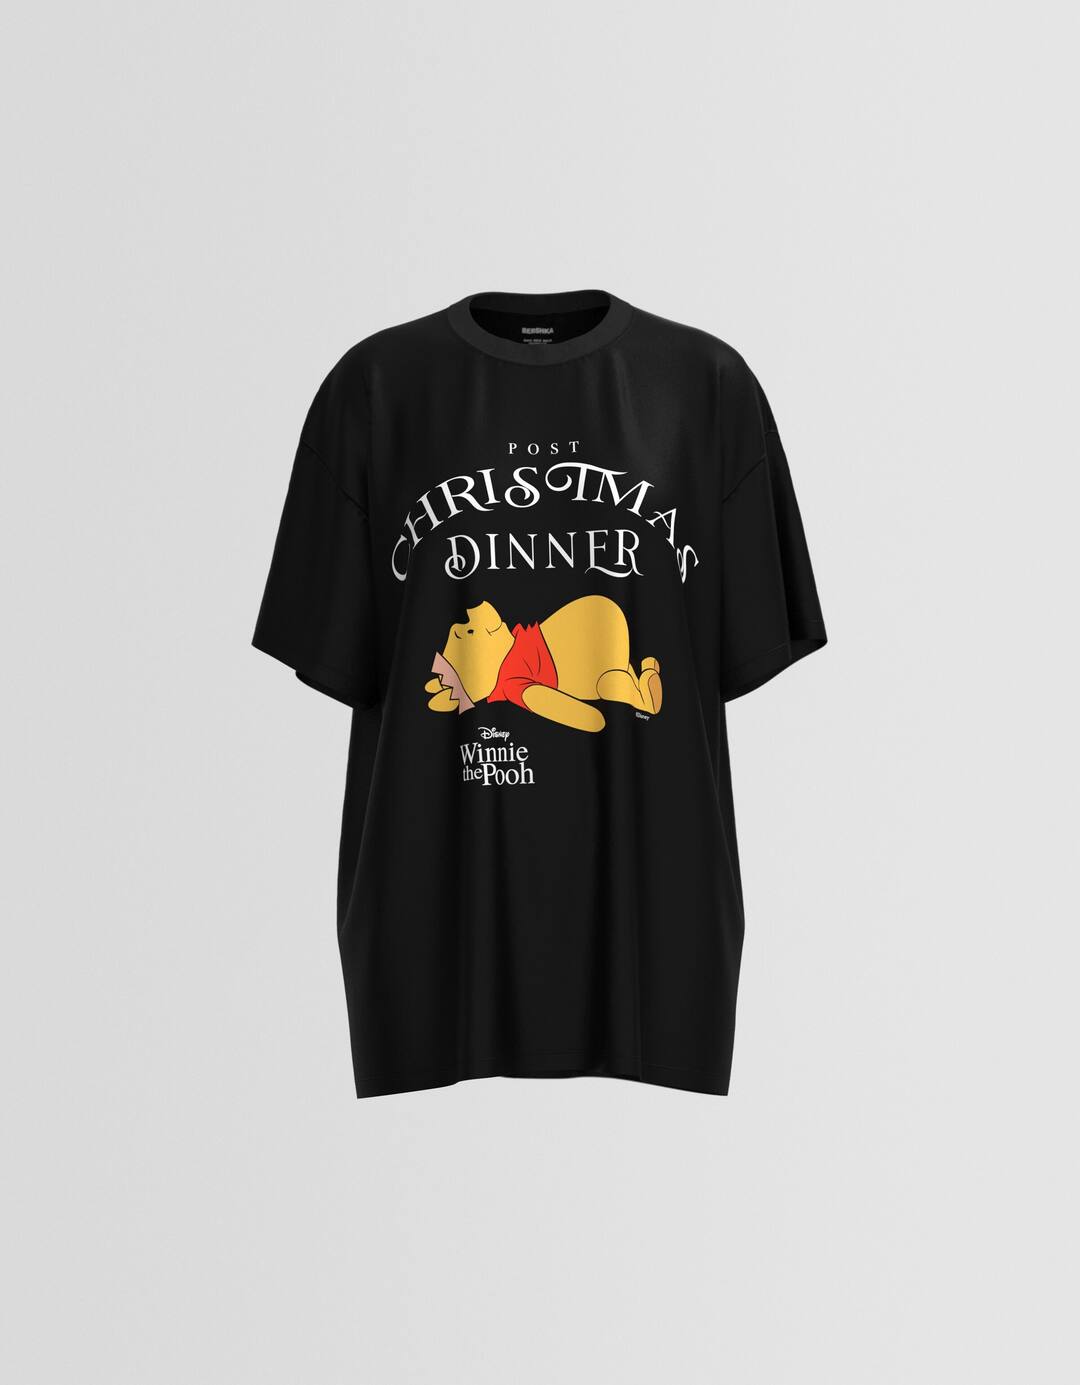 Winnie the Pooh print short sleeve oversize T-shirt